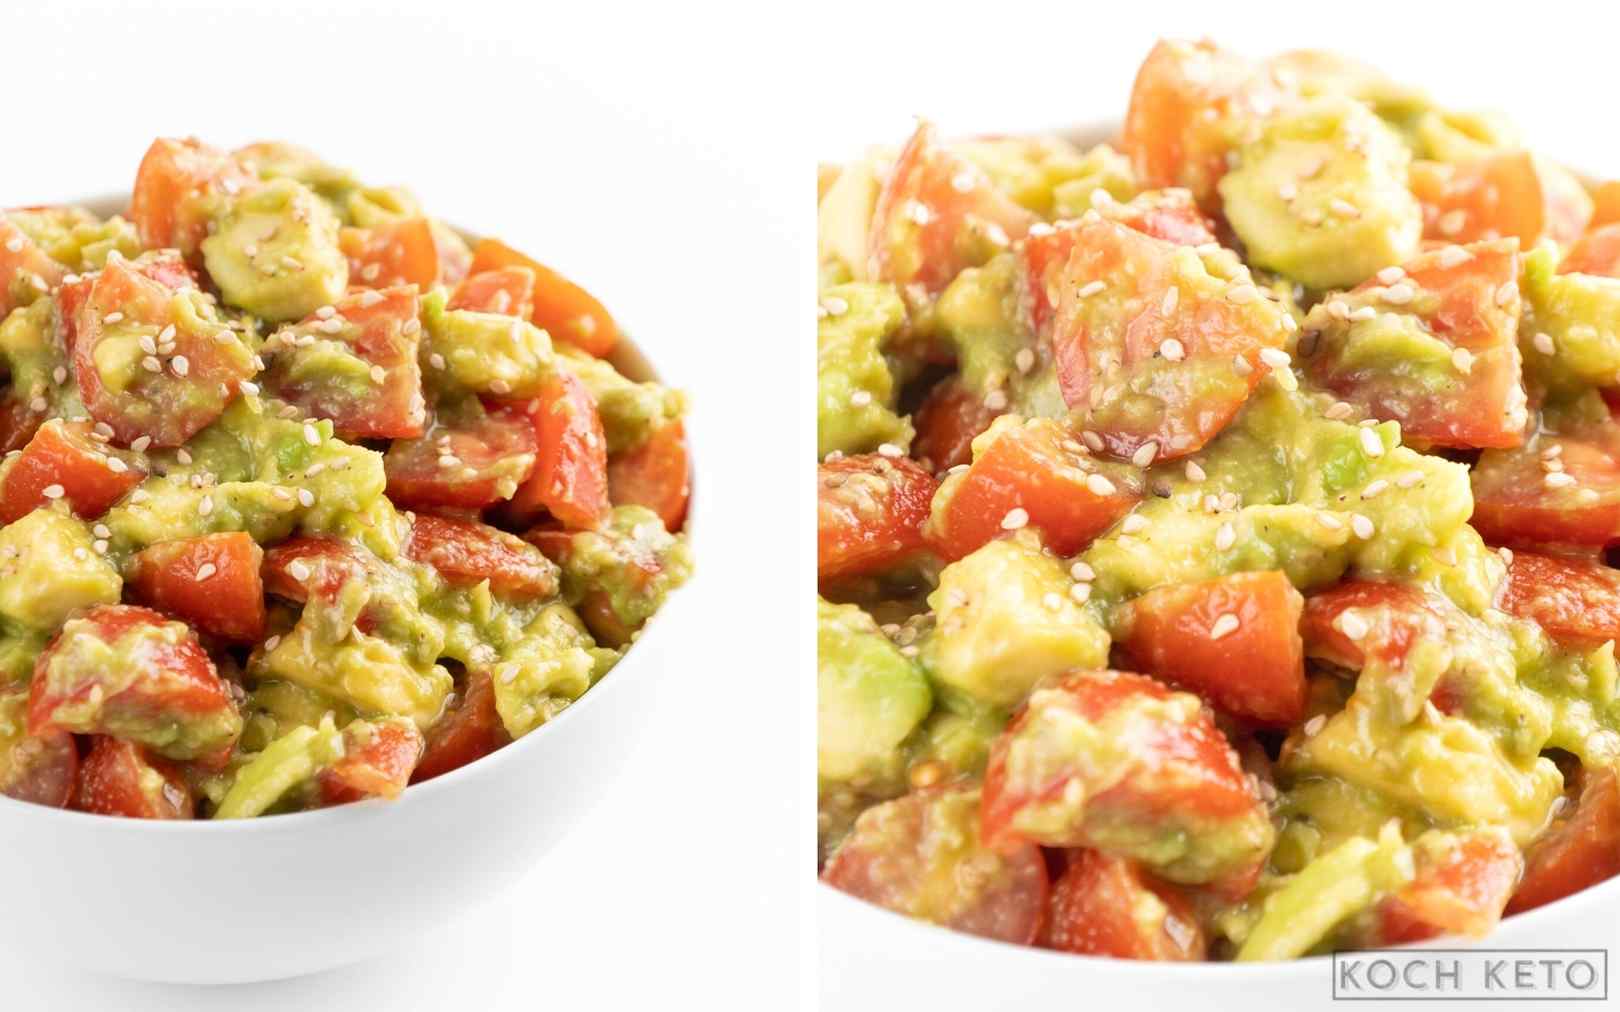 Schneller Keto Avocado-Tomaten-Salat als einfacher ketogener Snack ohne Kohlenhydrate Desktop Featured Image